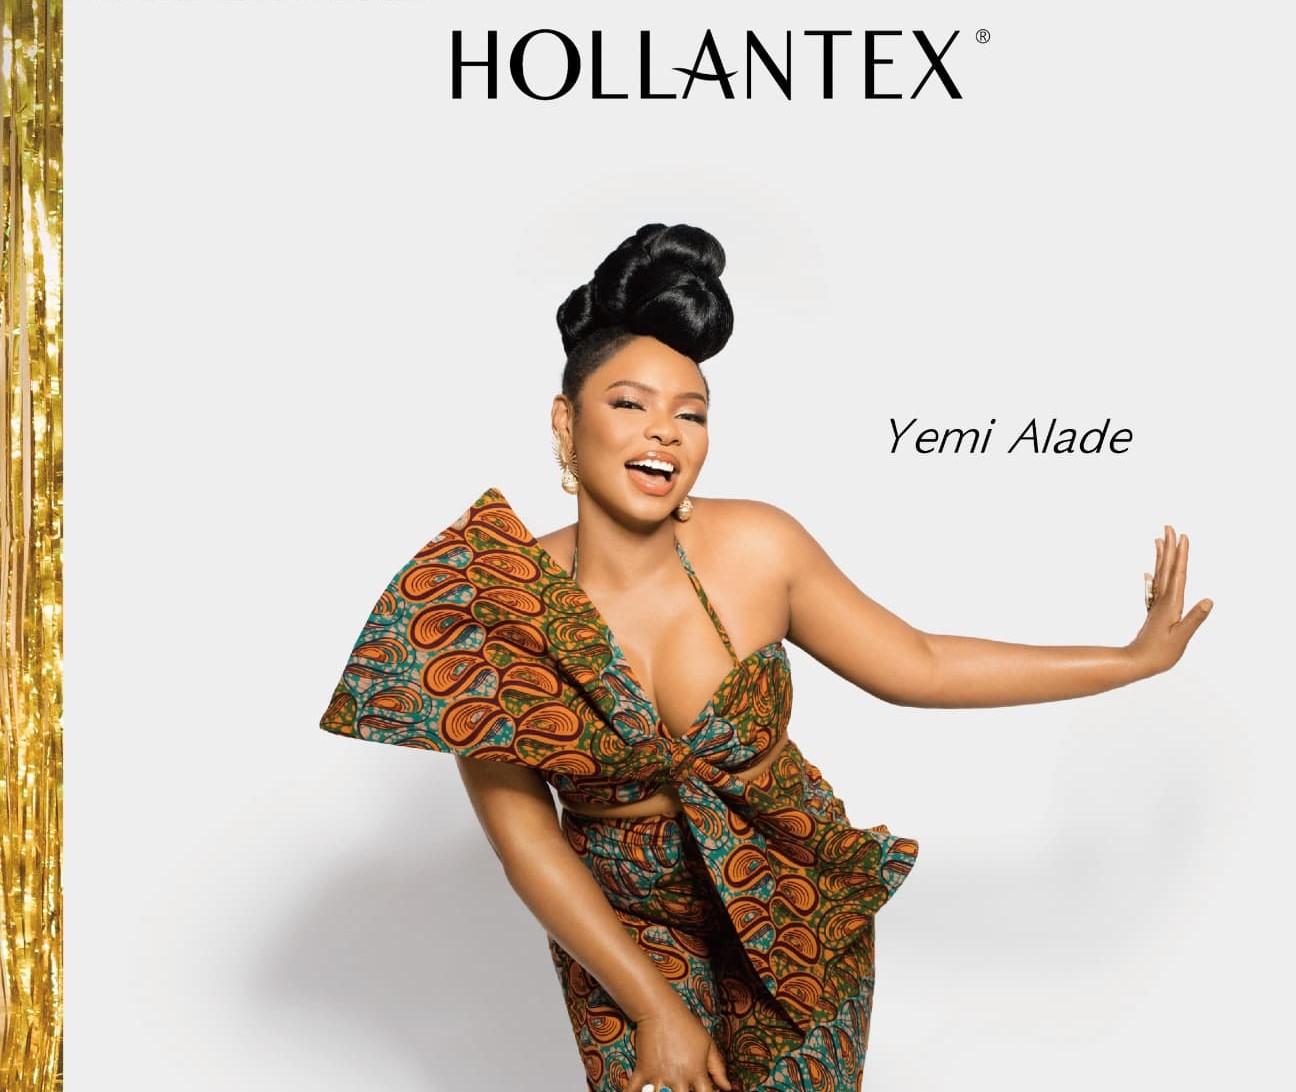 Yemi Alade signs ambassadorship deal with Hollantex